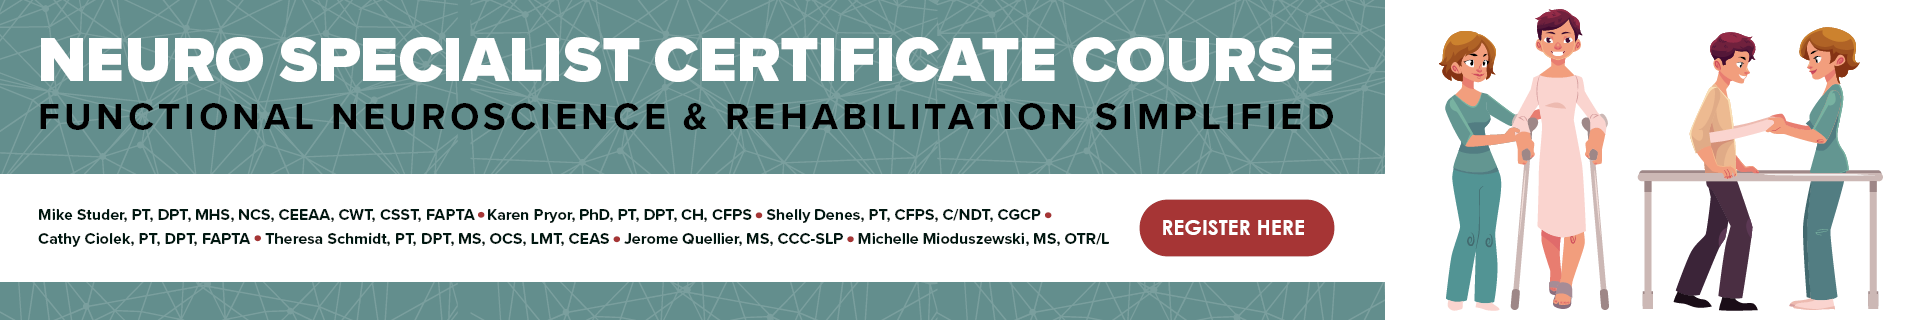 Neuro Specialist Certificate Course: Functional Neuroscience & Rehabilitation Simplified